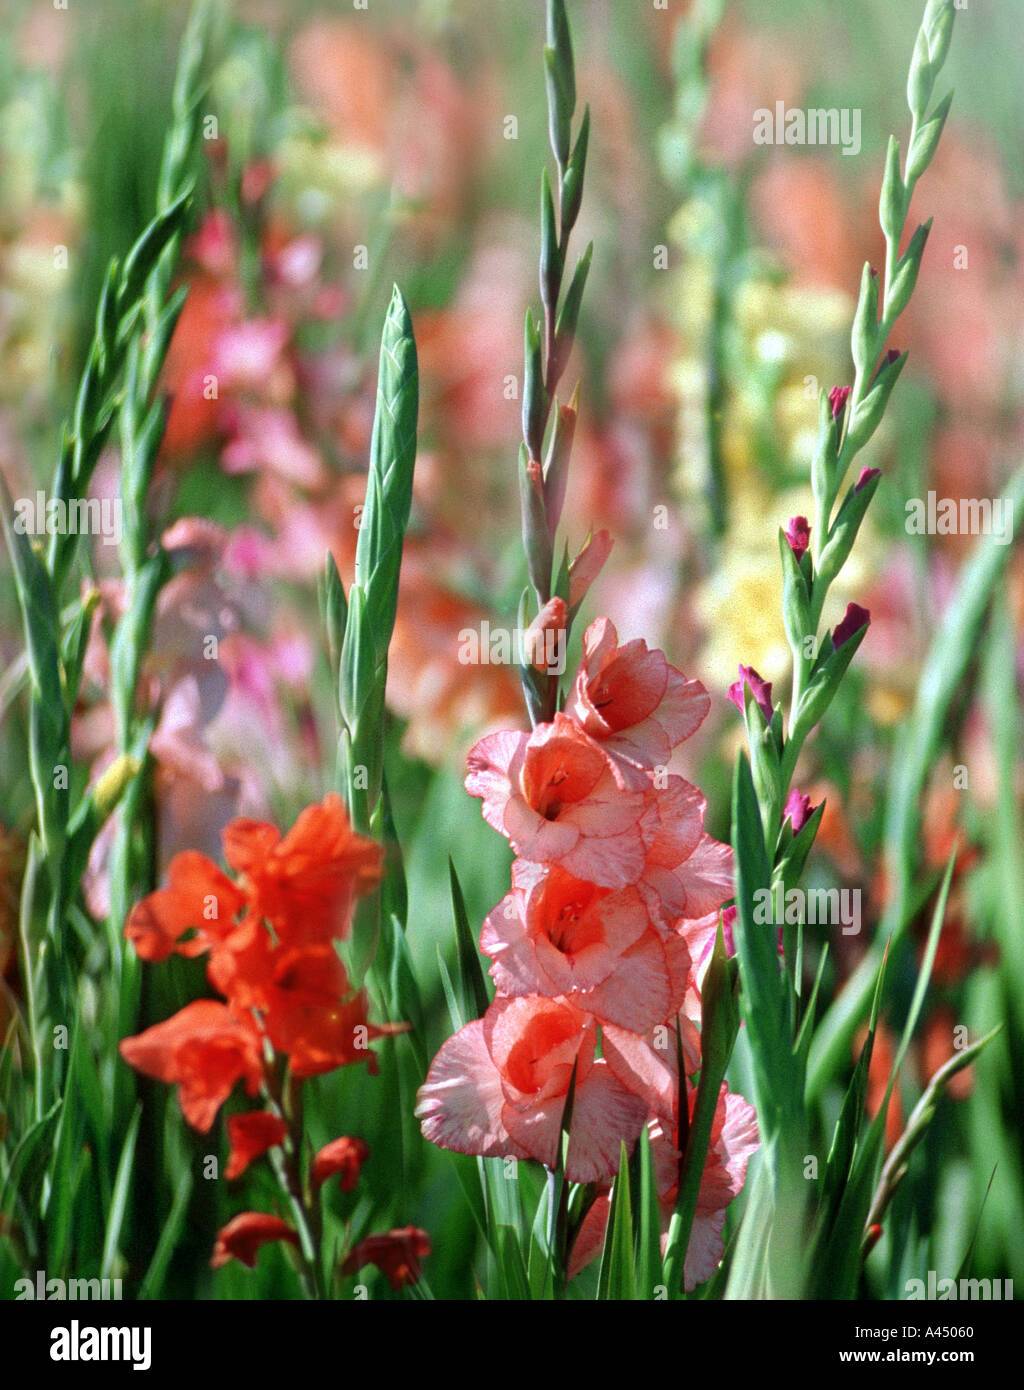 field with gladiolas flowers GLADIOLA GANDAVENSIS Stock Photo